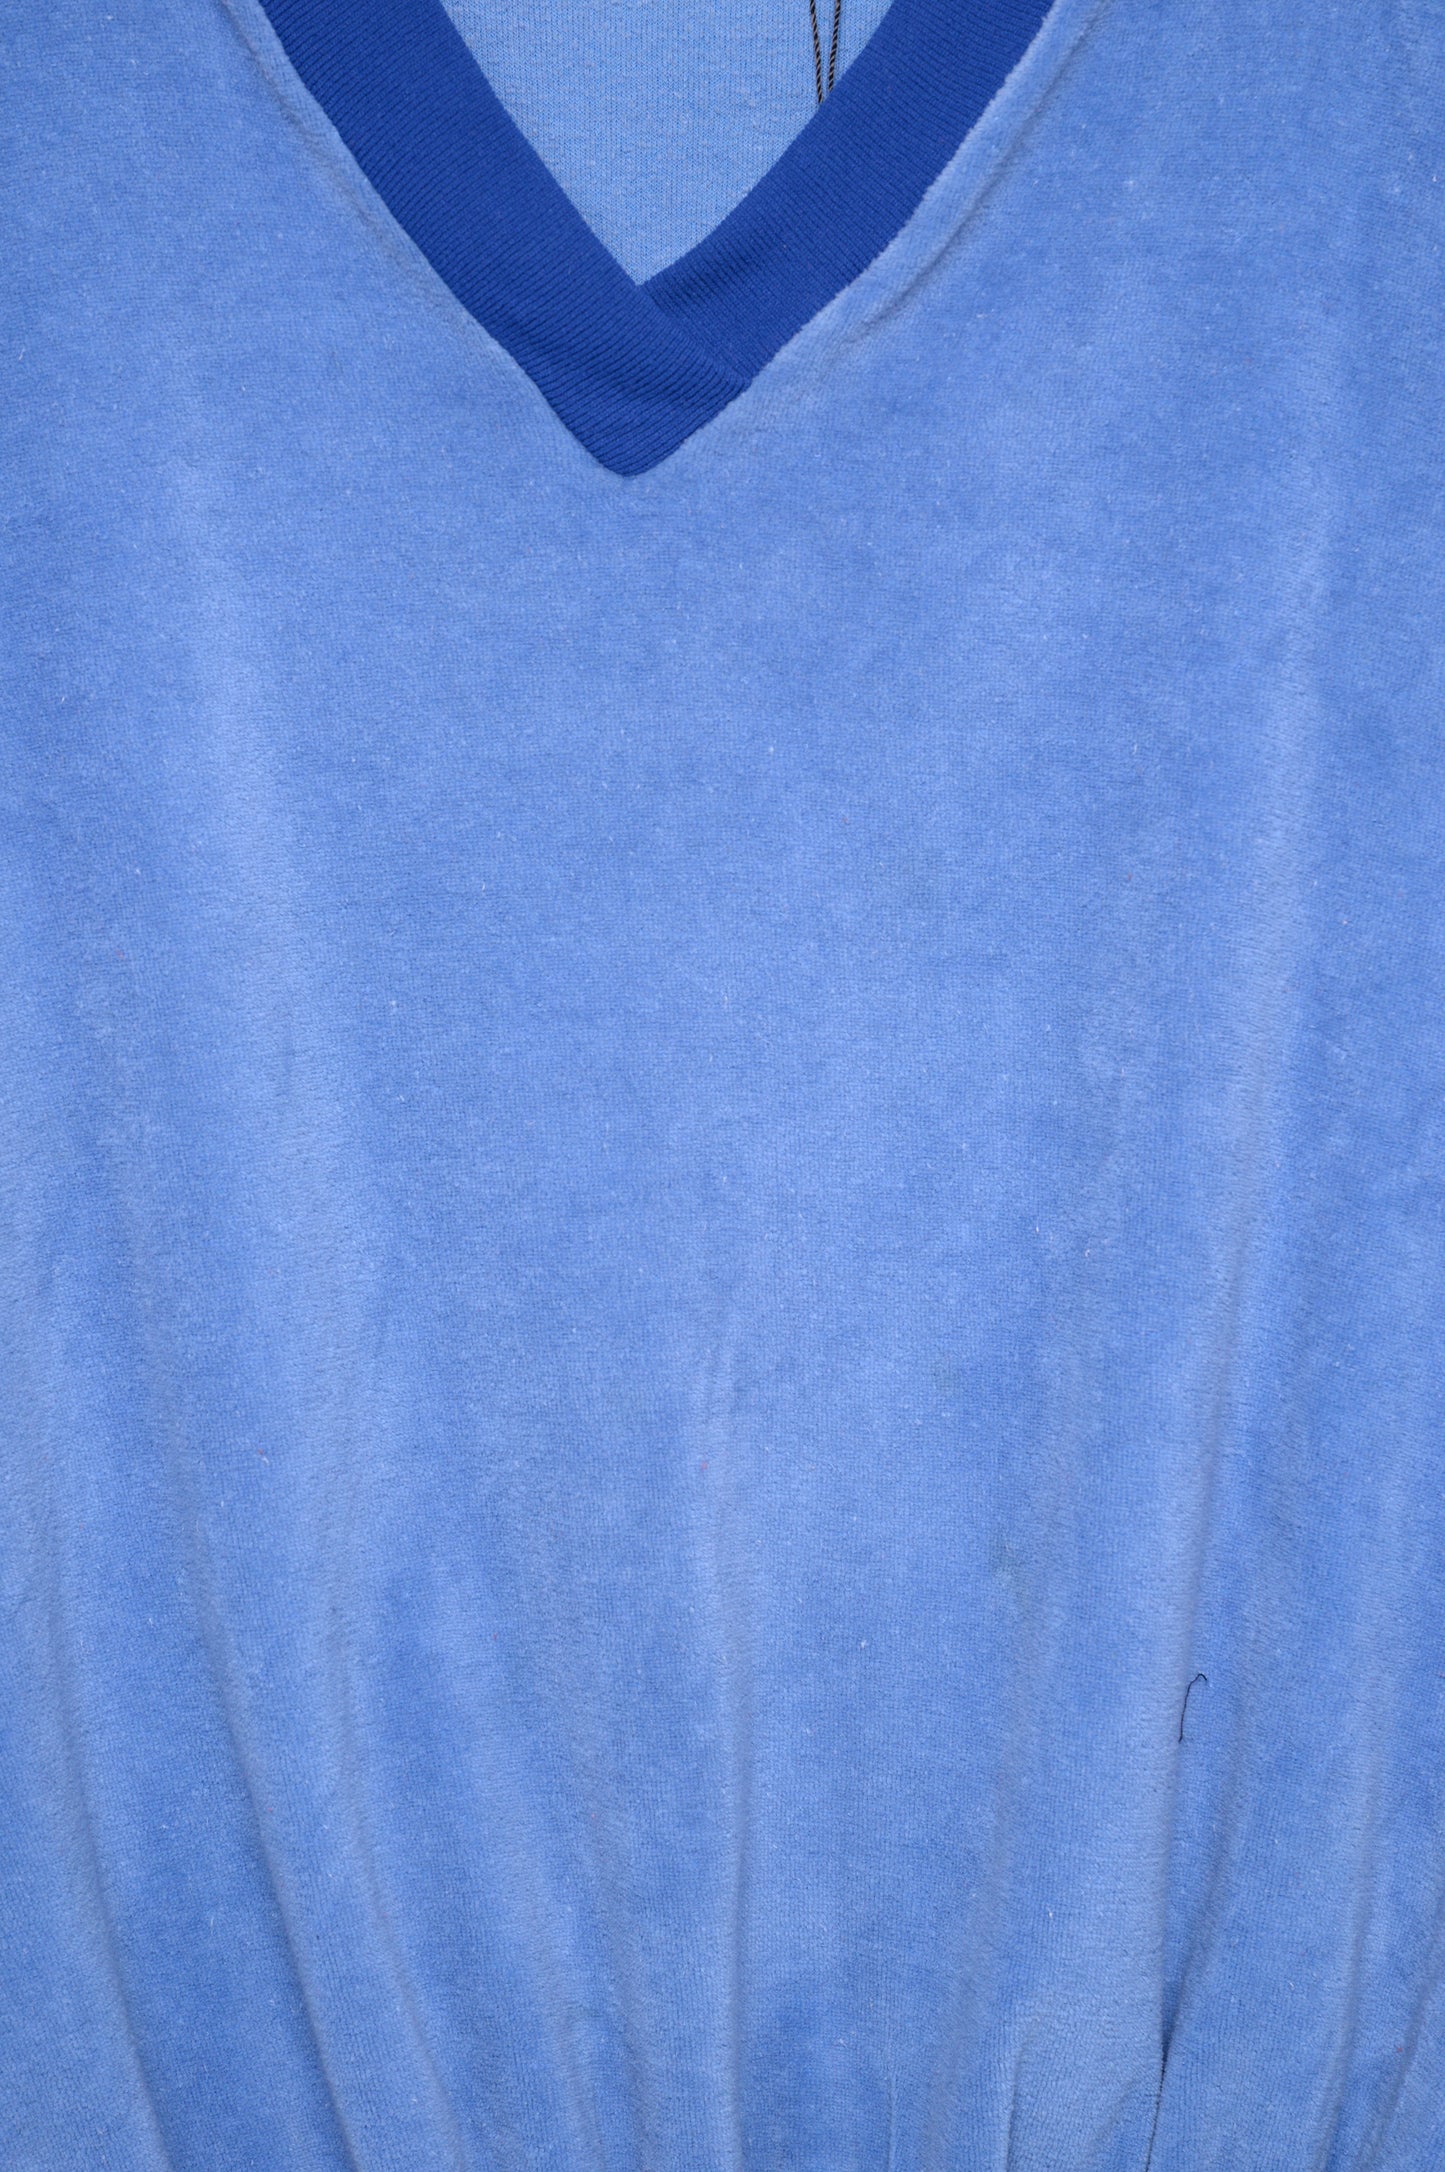 1980s Blue Velour Sweatshirt